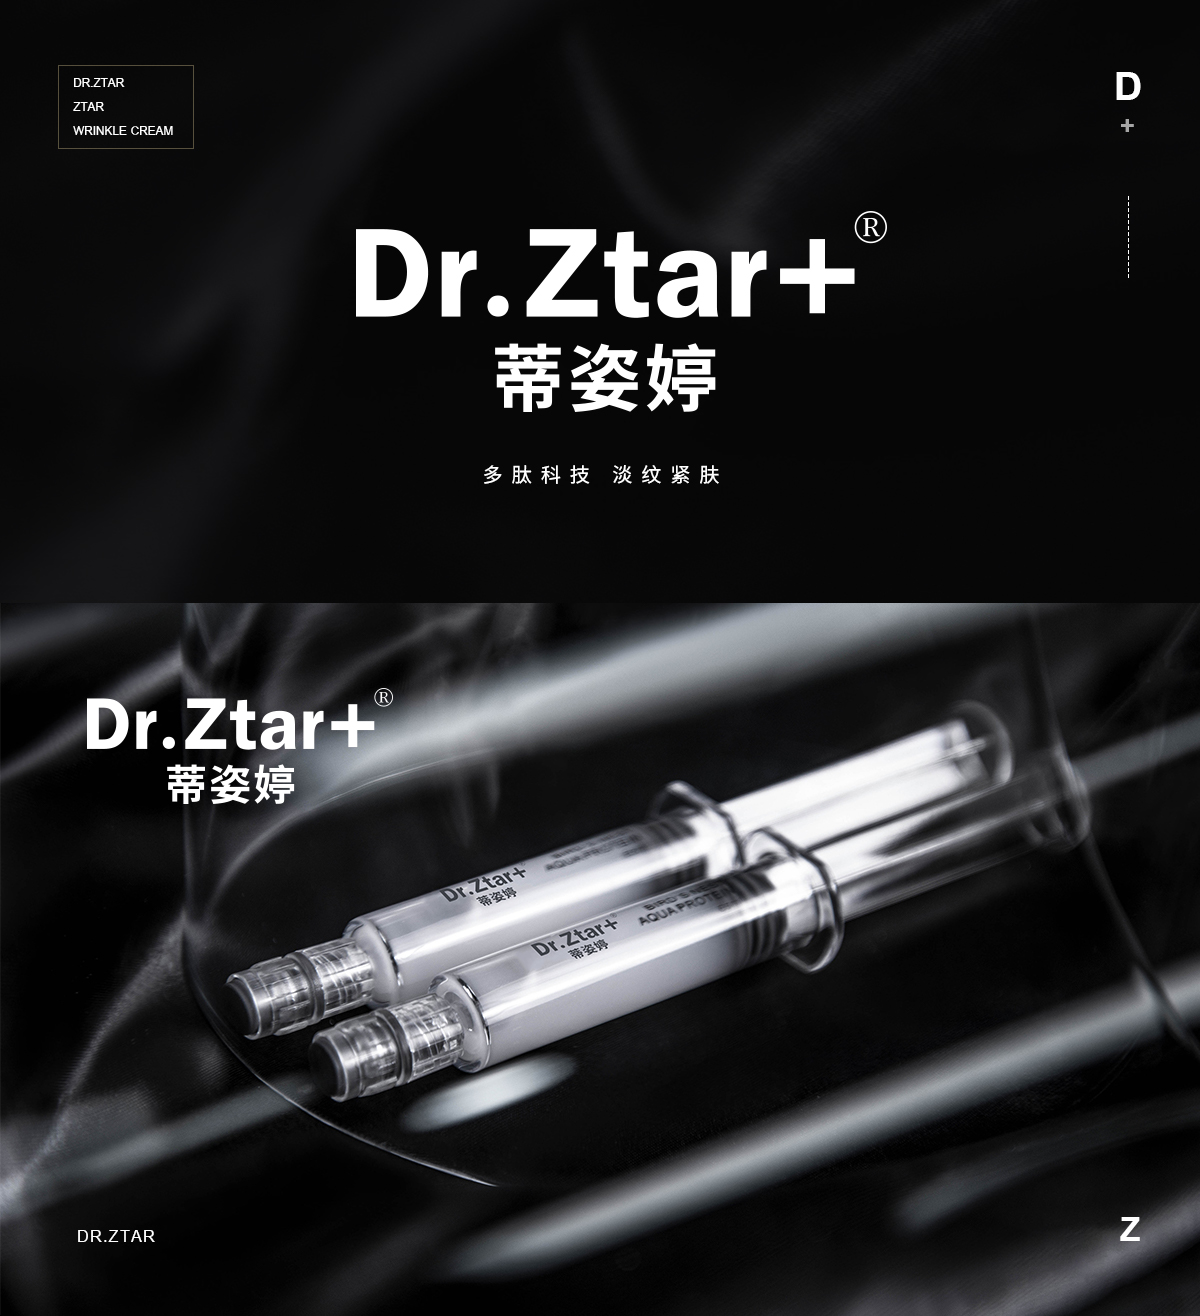 蒂姿婷 DR.ZTAR+